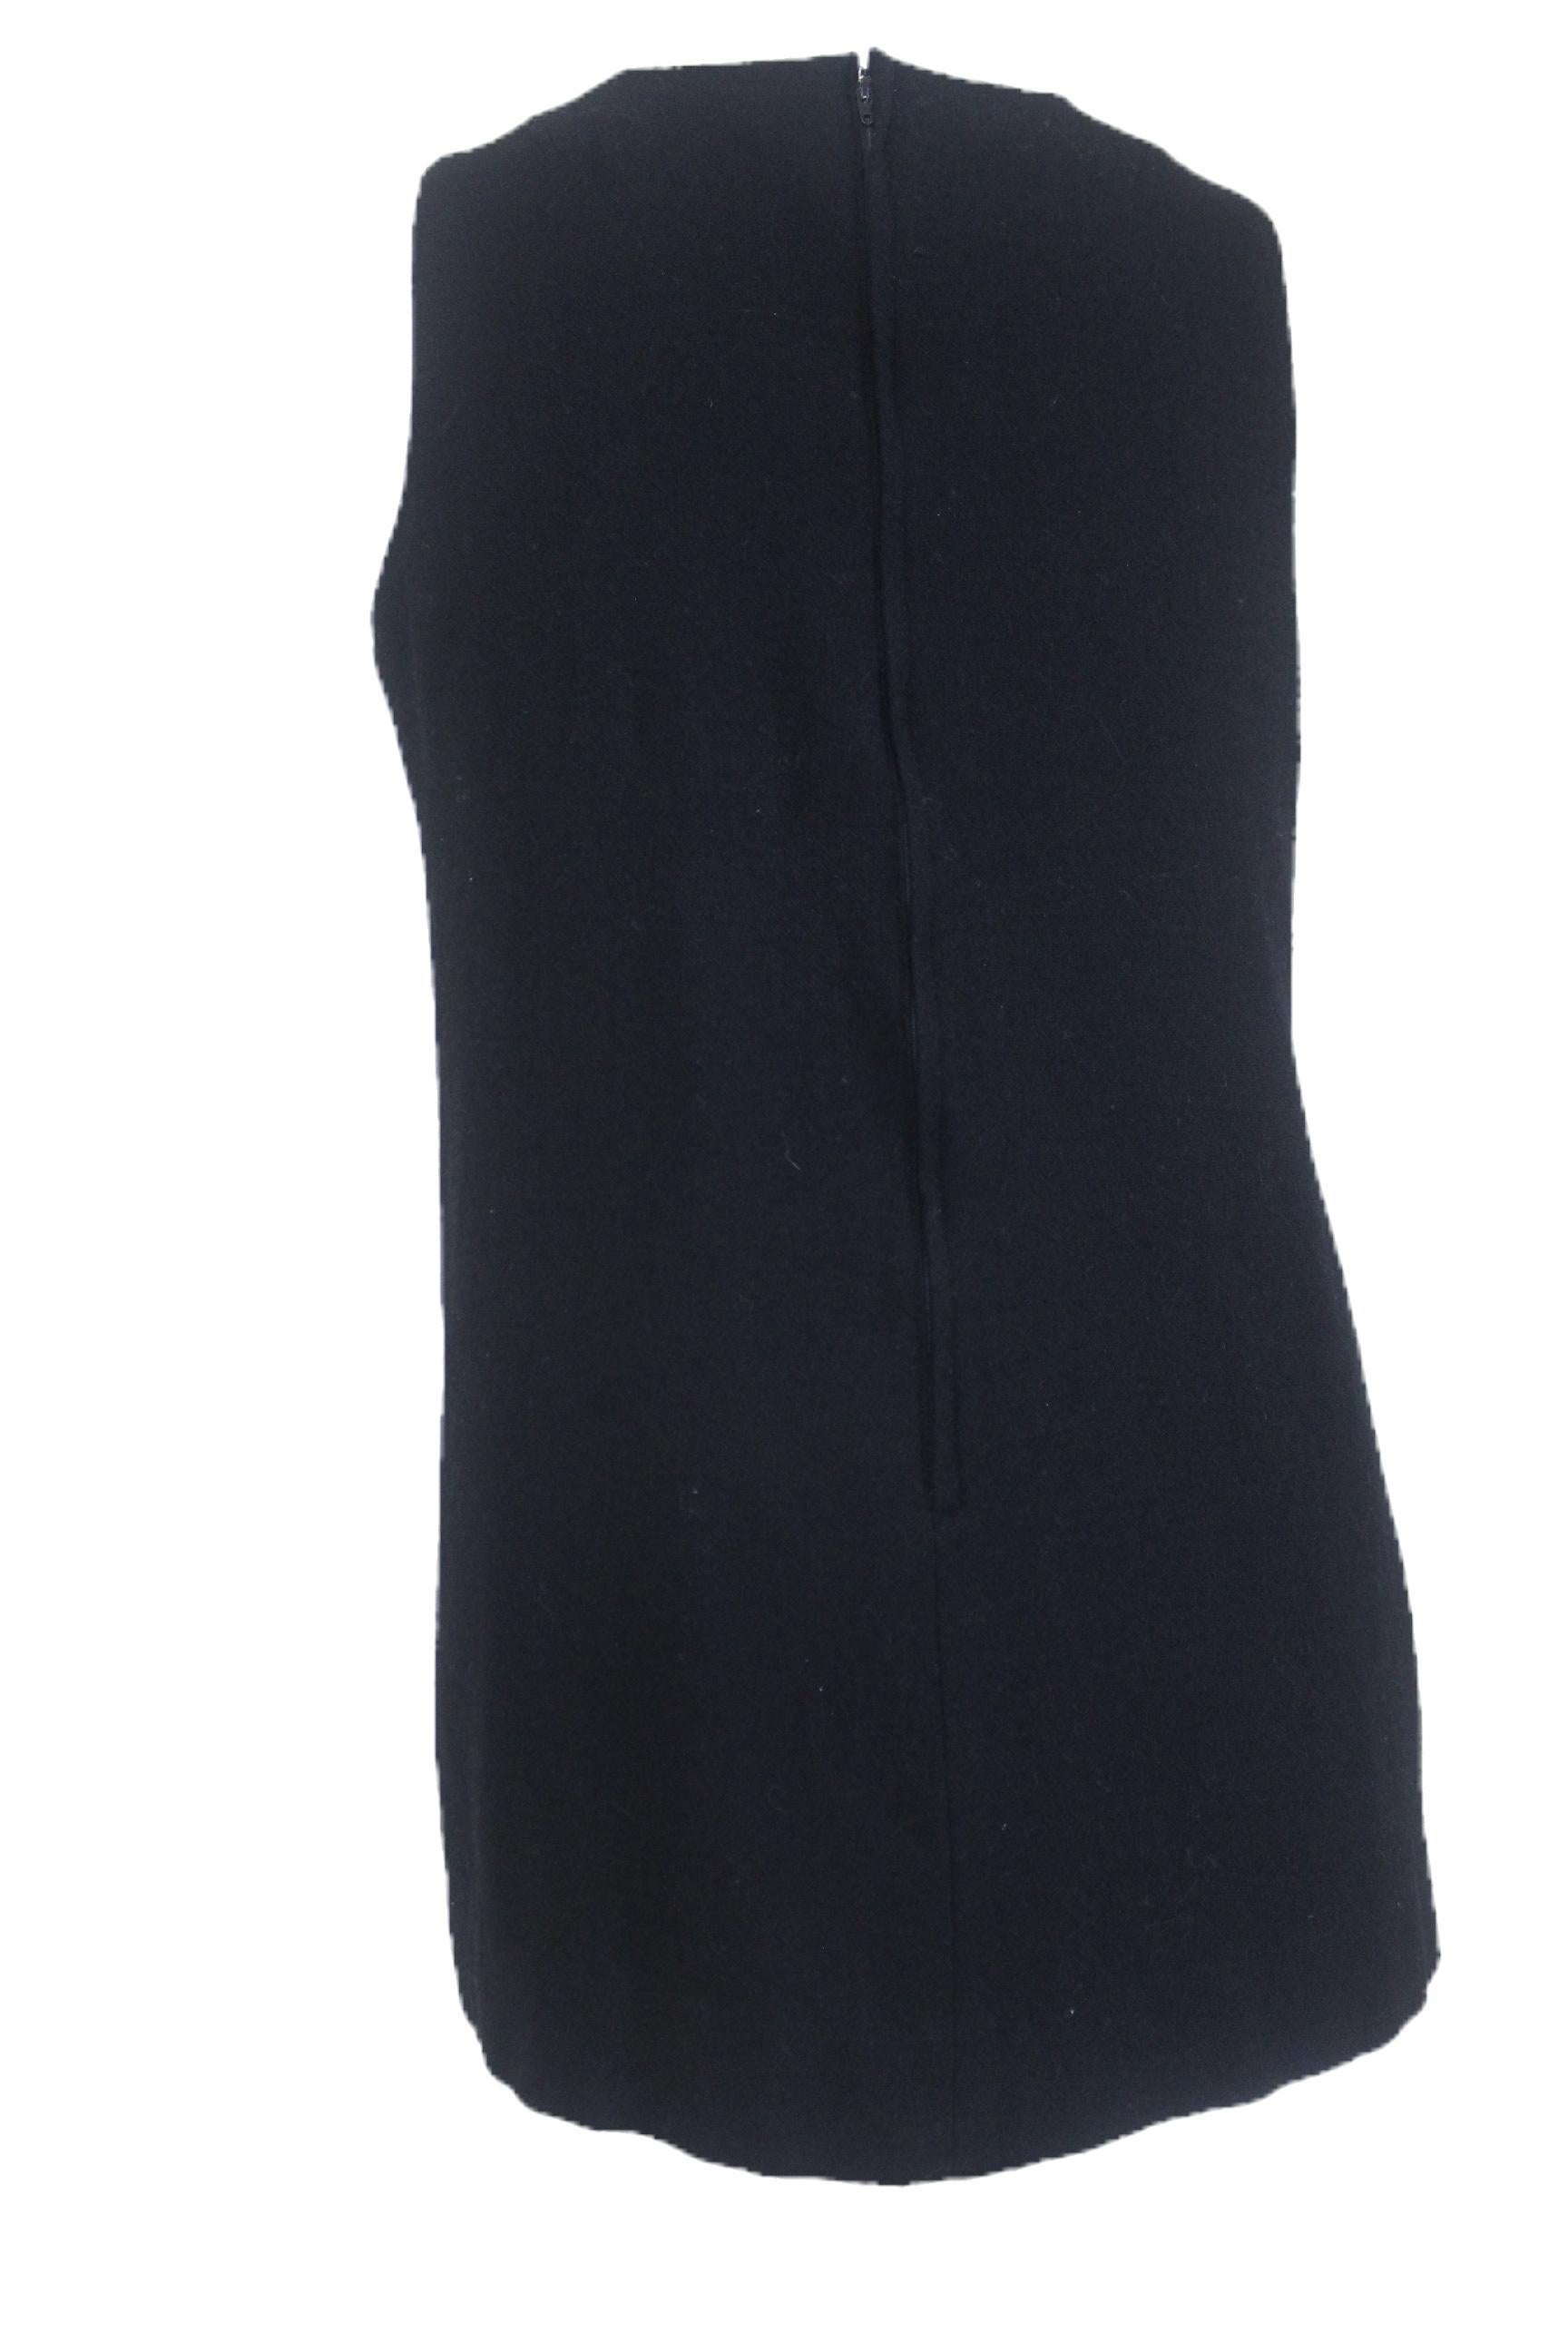 Creation Pierre Cardin Tunic/Mini Dress For Sale 3